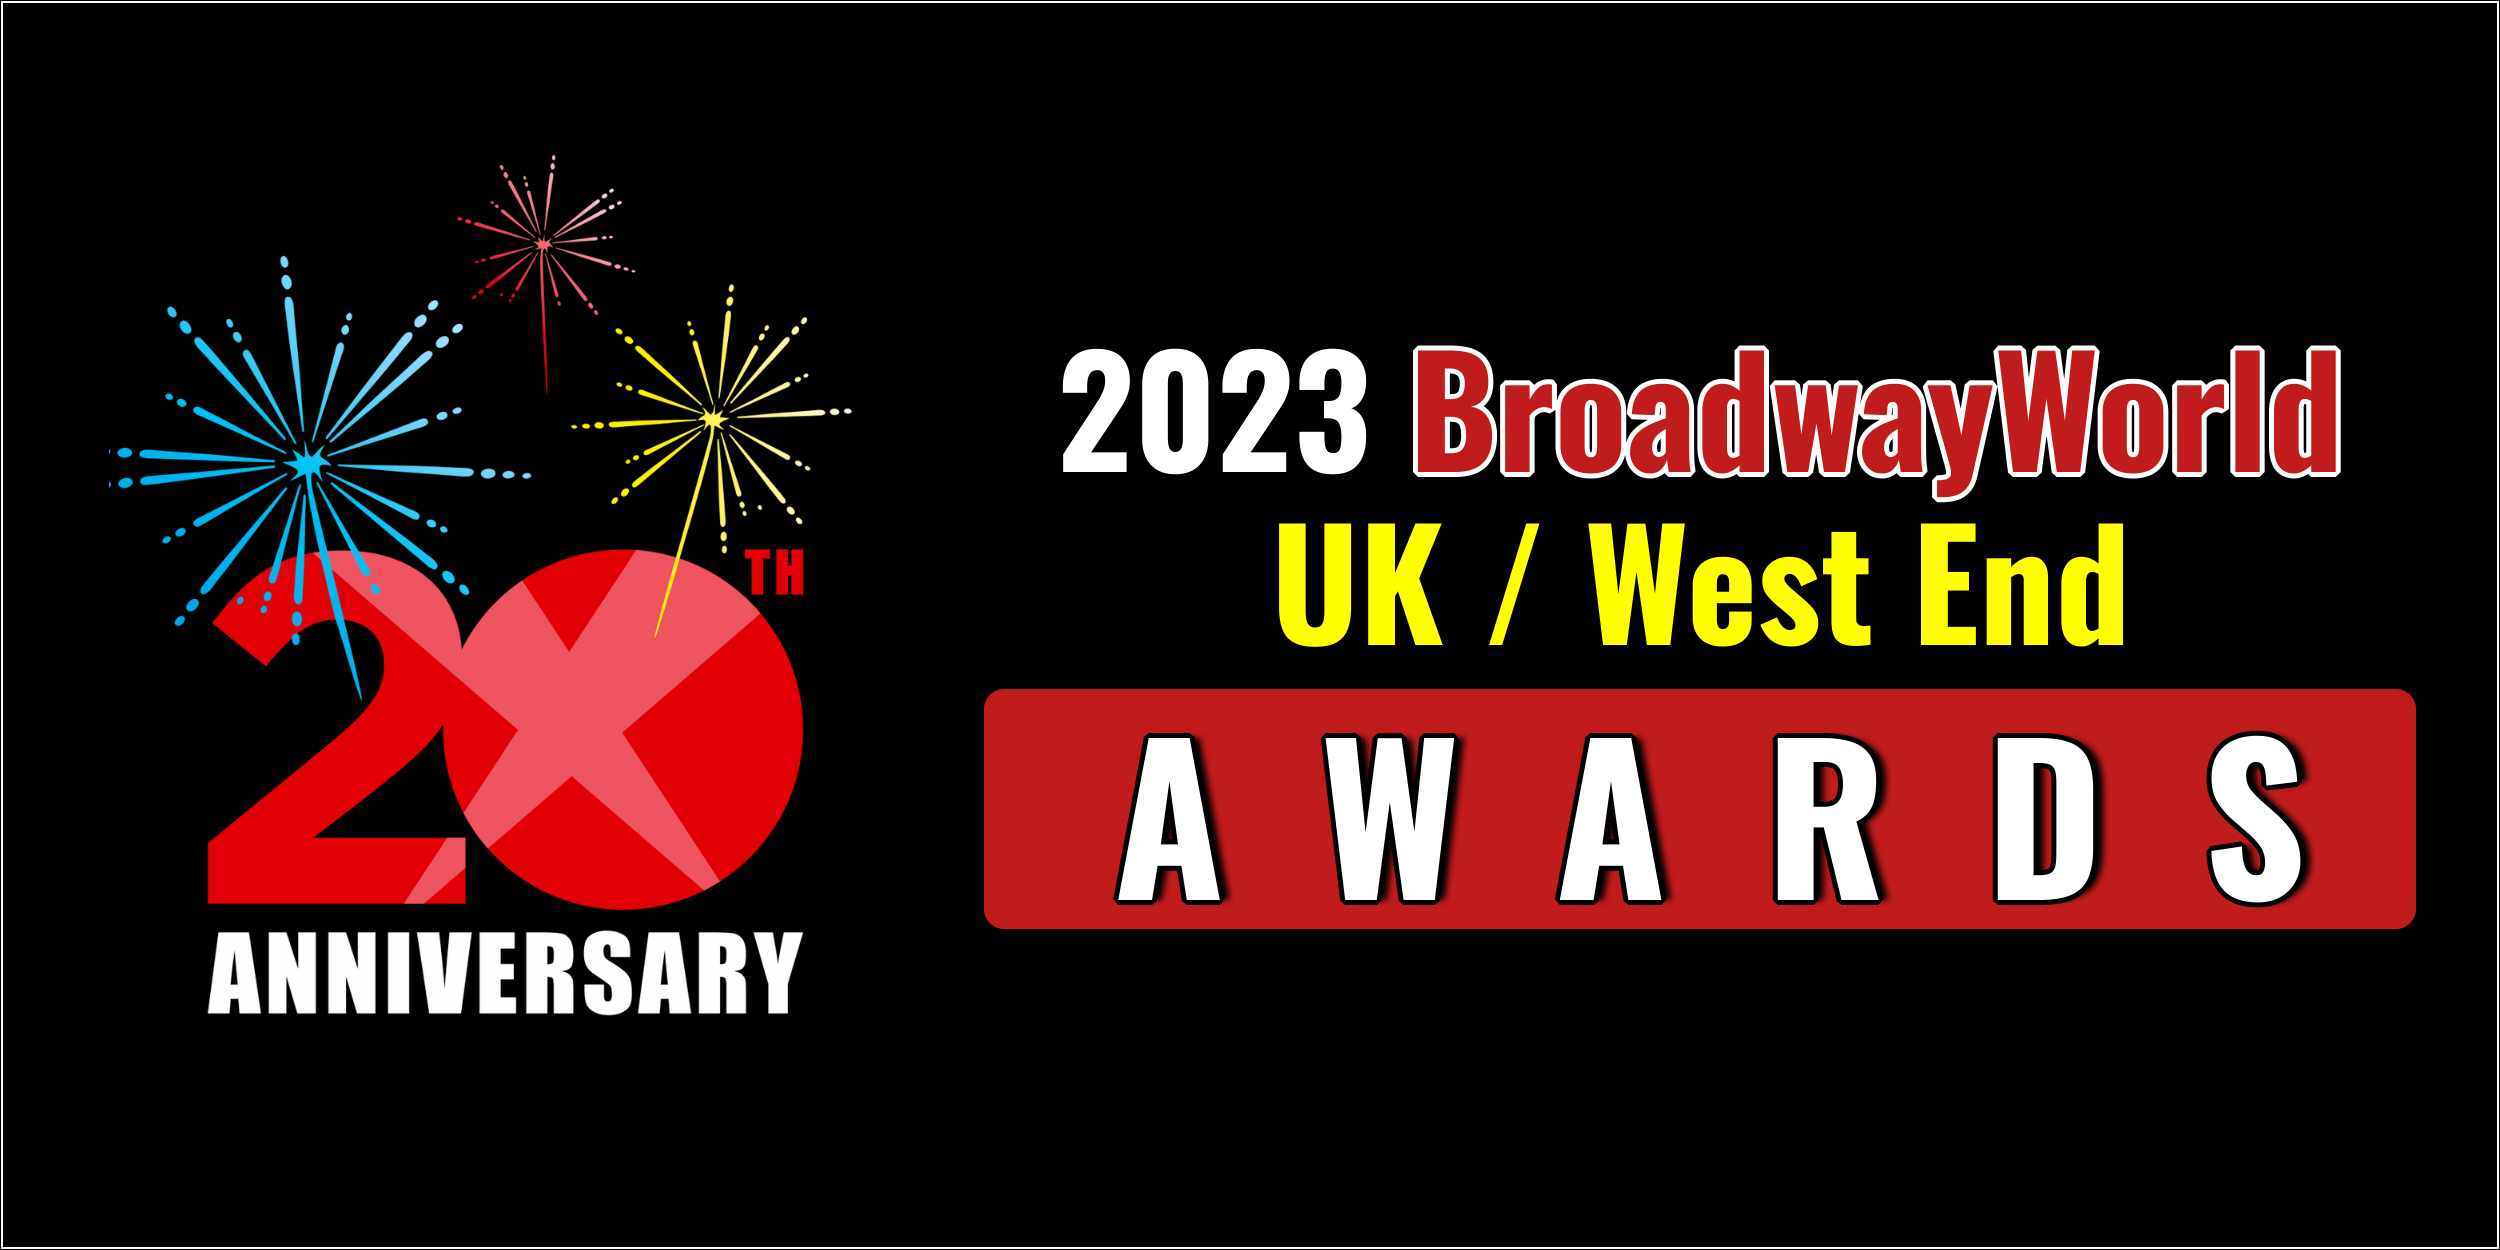 BroadwayWorld UK / West End Awards December 5th Standings